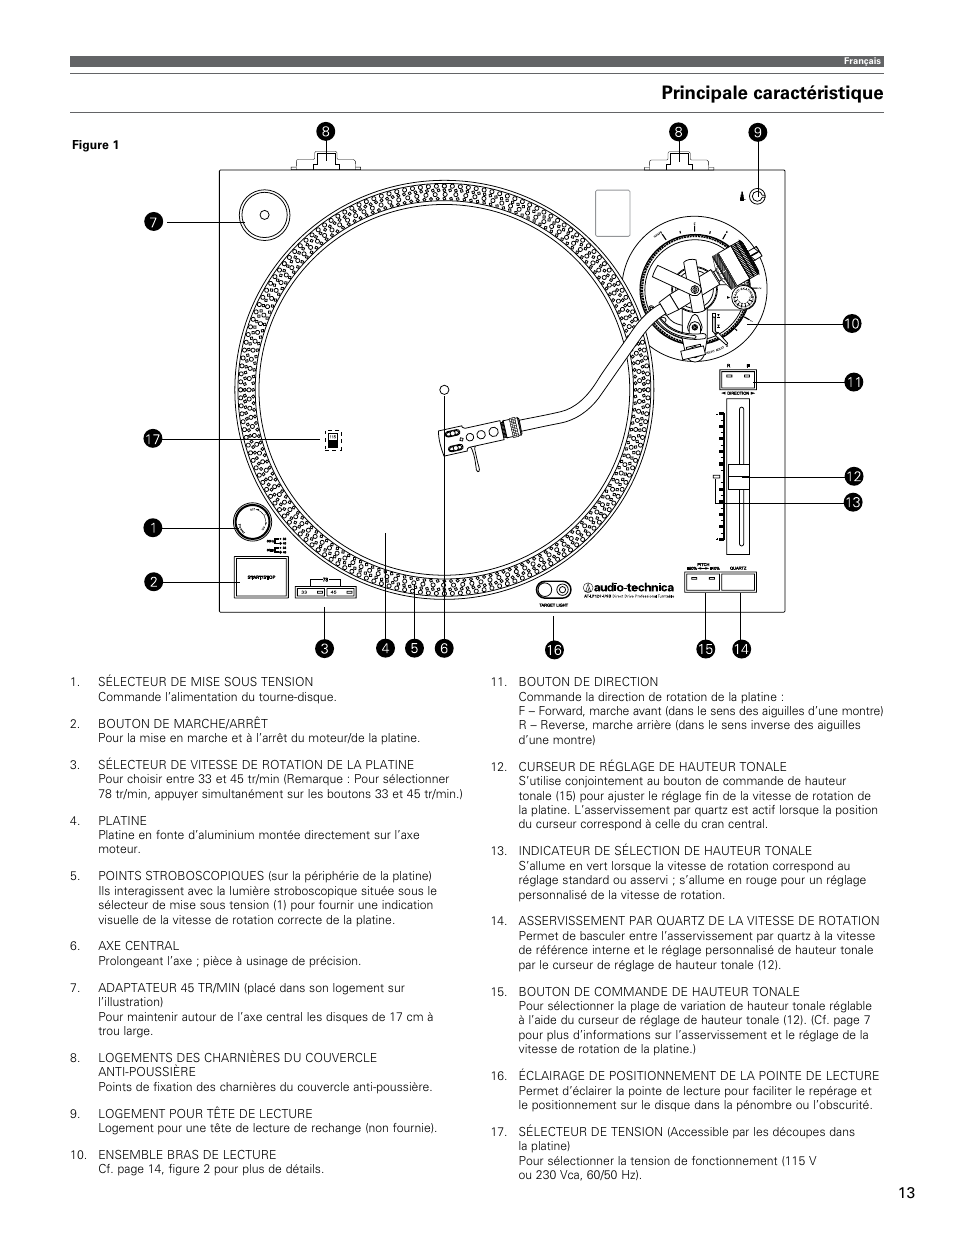 Principale caractéristique | Audio-Technica AT-LP120-USB User Manual | Page  13 / 32 | Original mode